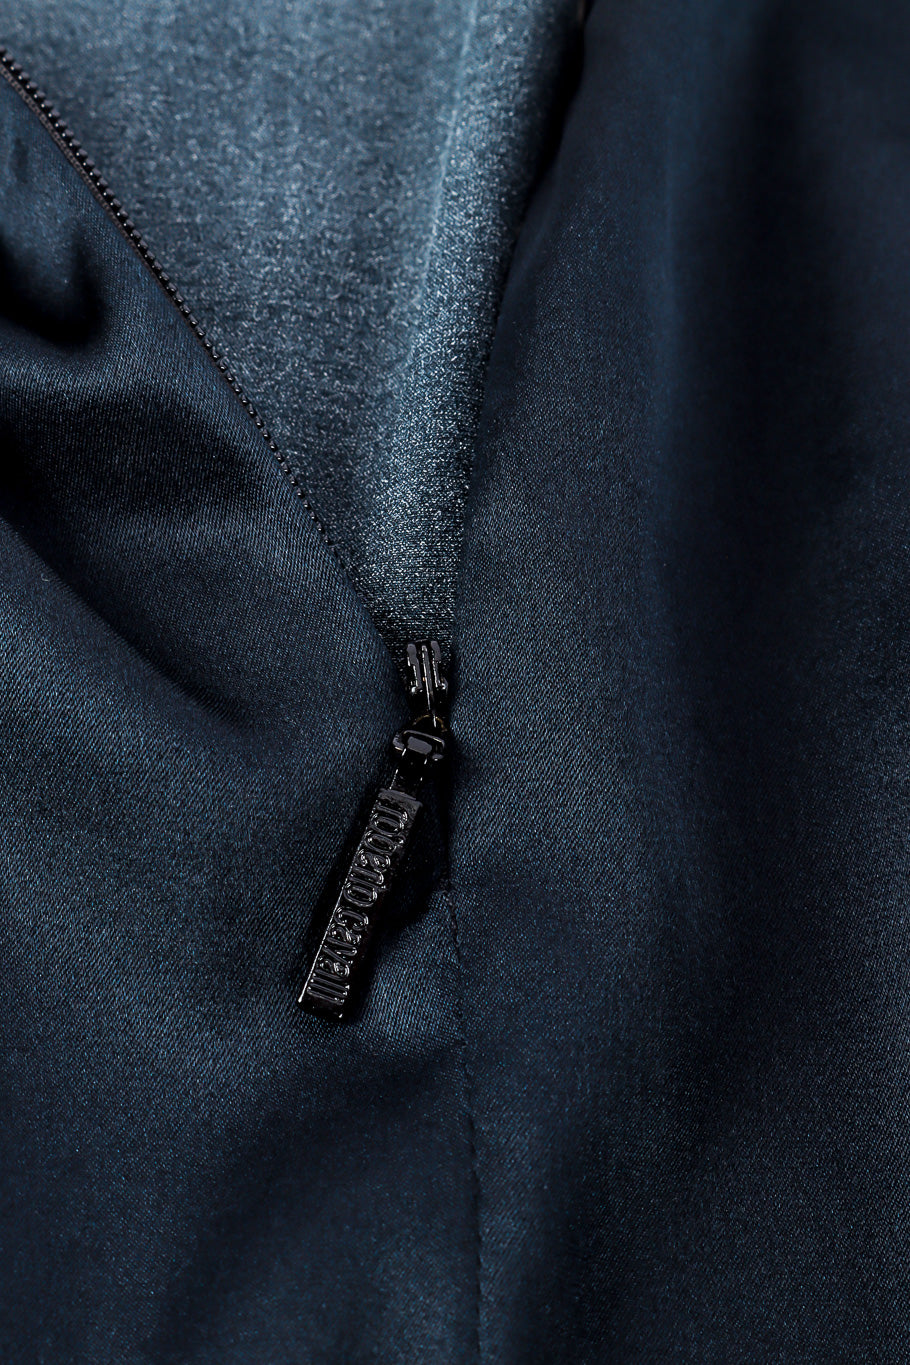 Roberto Cavalli Baroque Wings Graphic Silk Dress back zipper closure closeup @Recessla